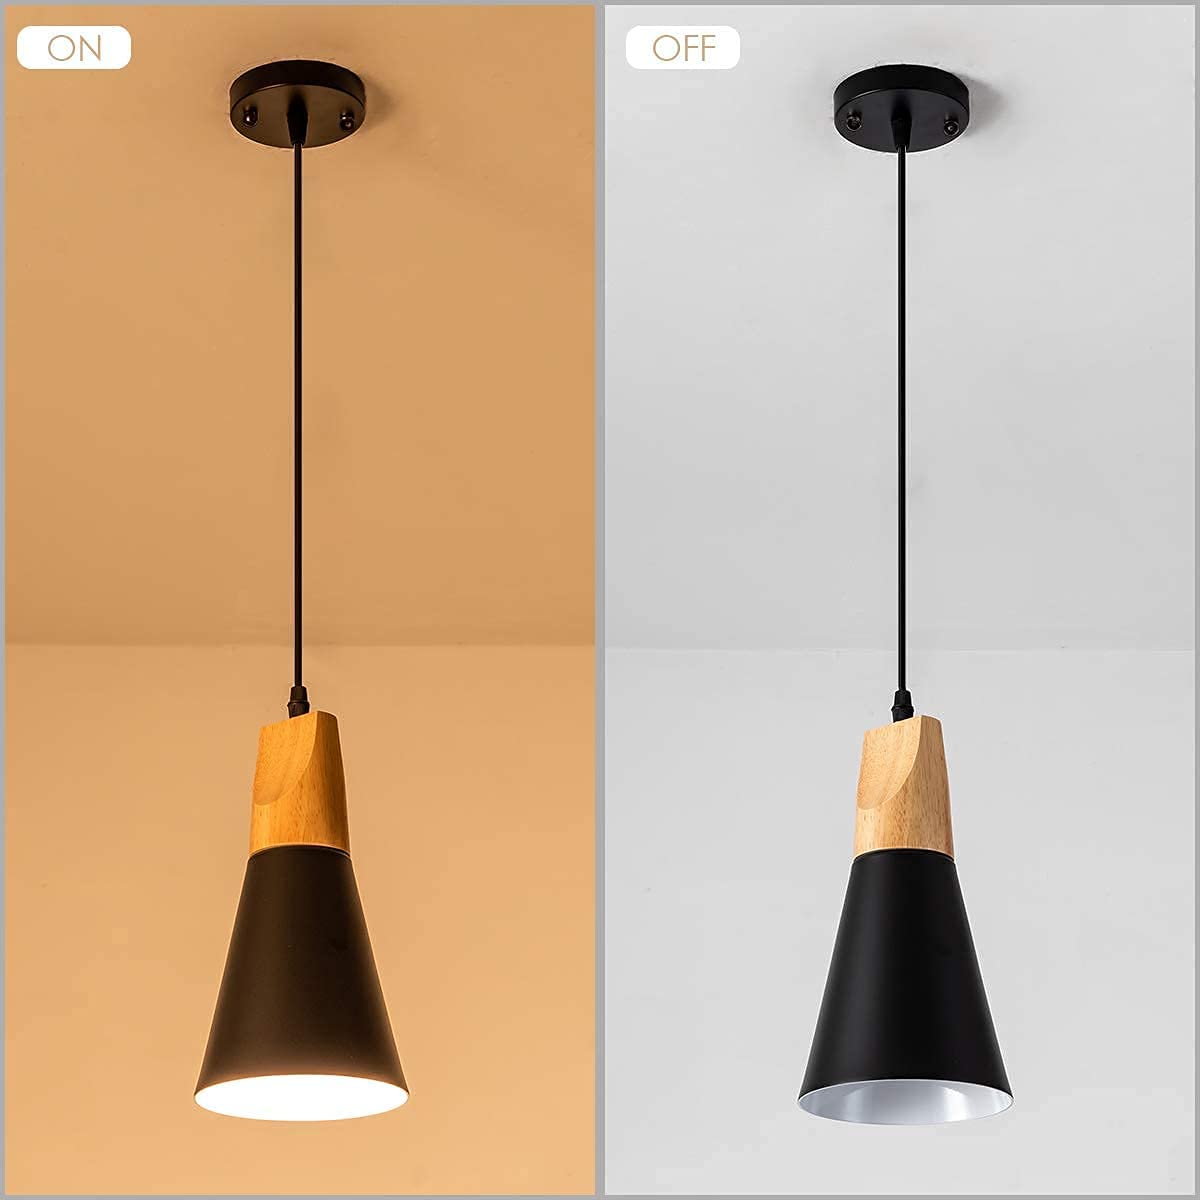 Wooden pendent lights in kitchen island black mini hanging light fixture